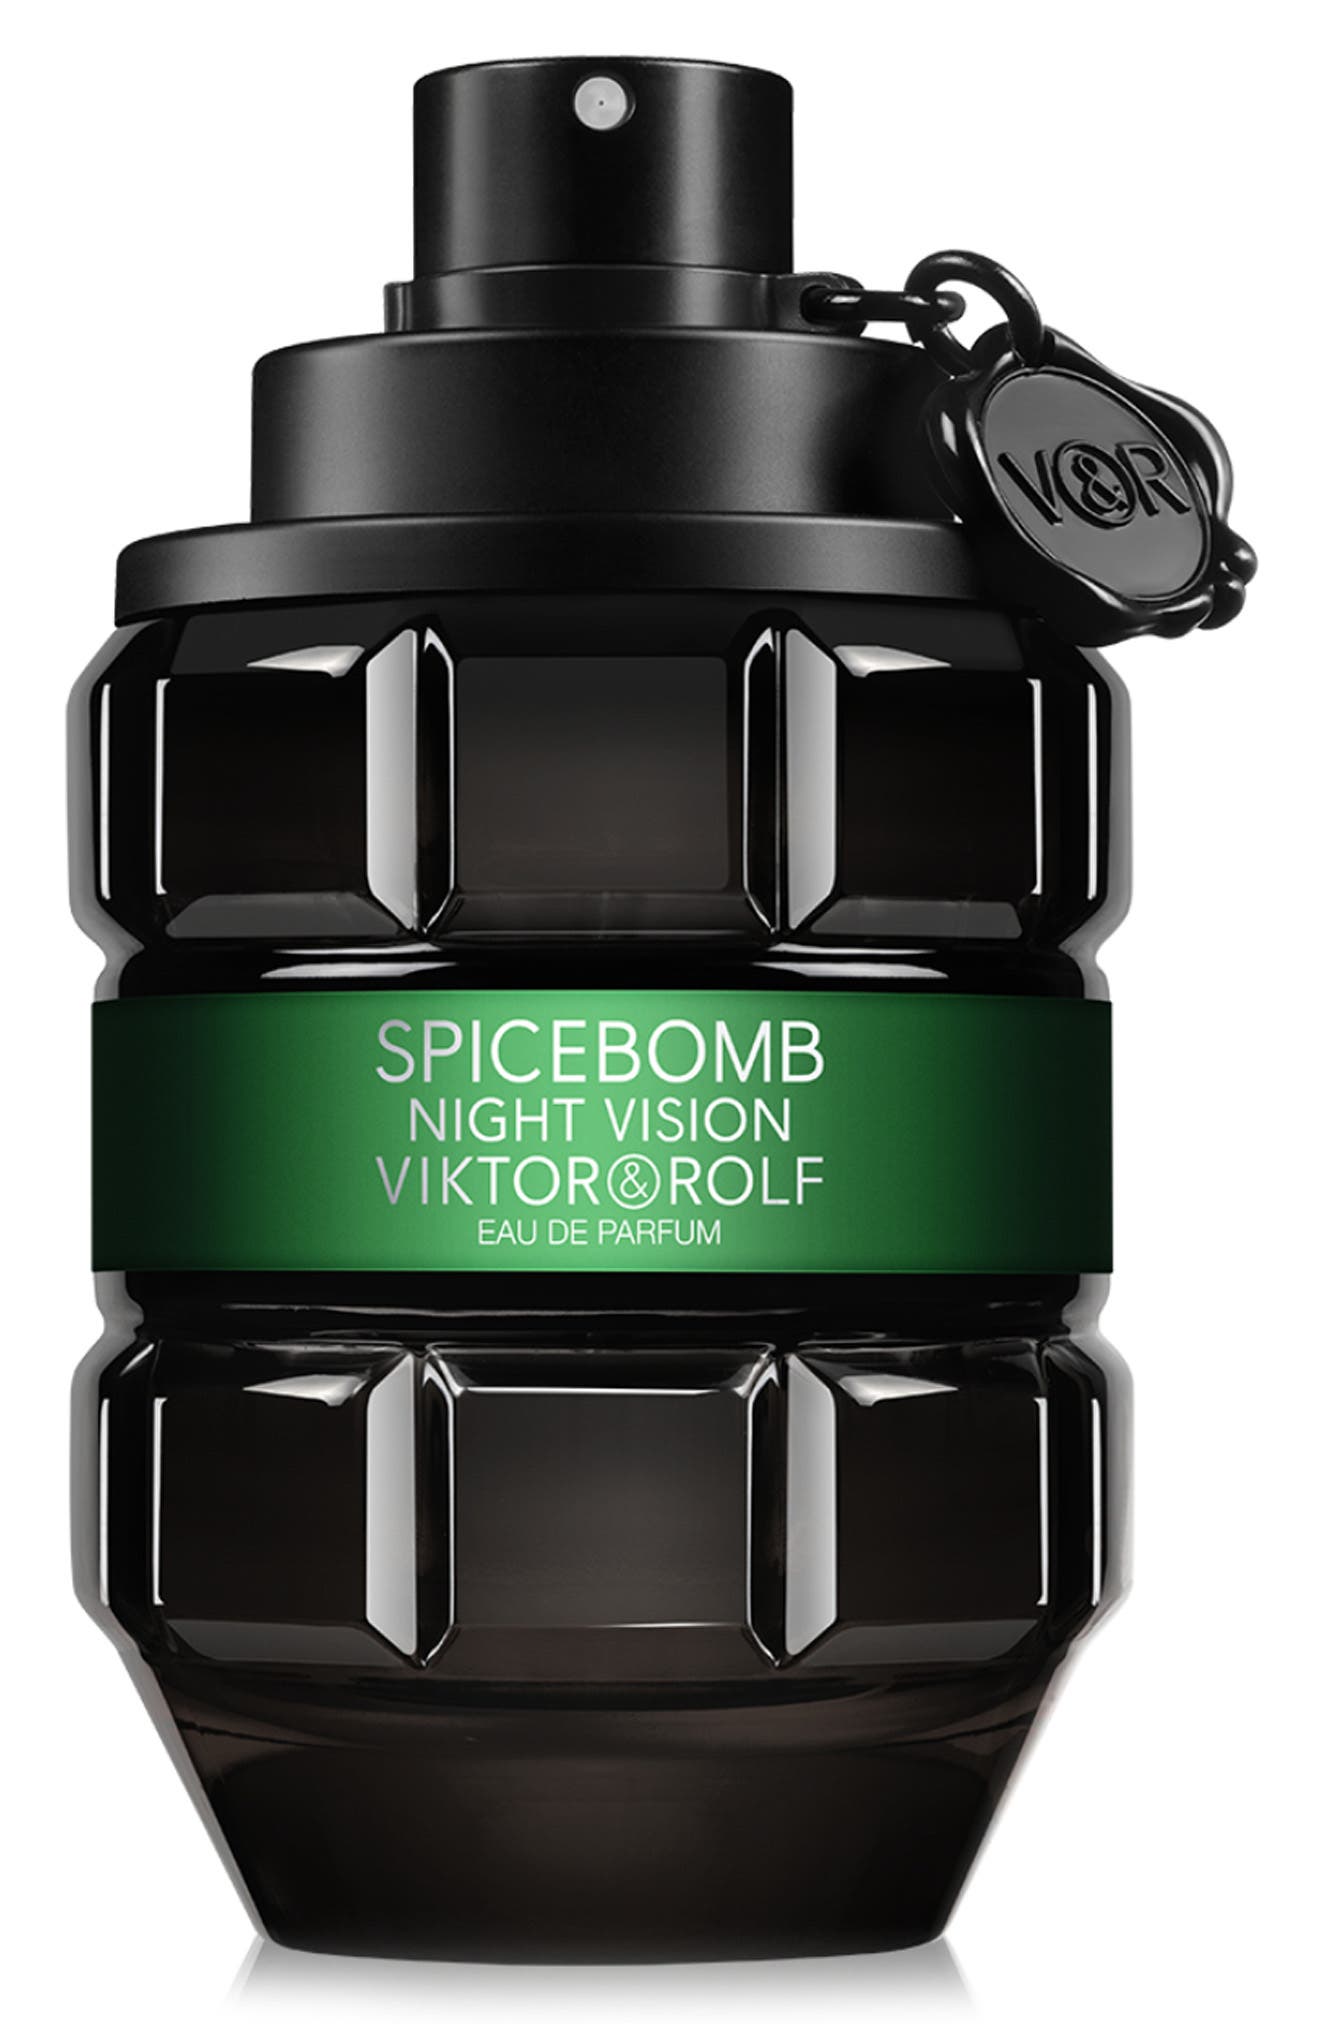 Viktor & Rolf Spicebomb Night Vision Eau de Parfum at Nordstrom, Size 3.04 Oz